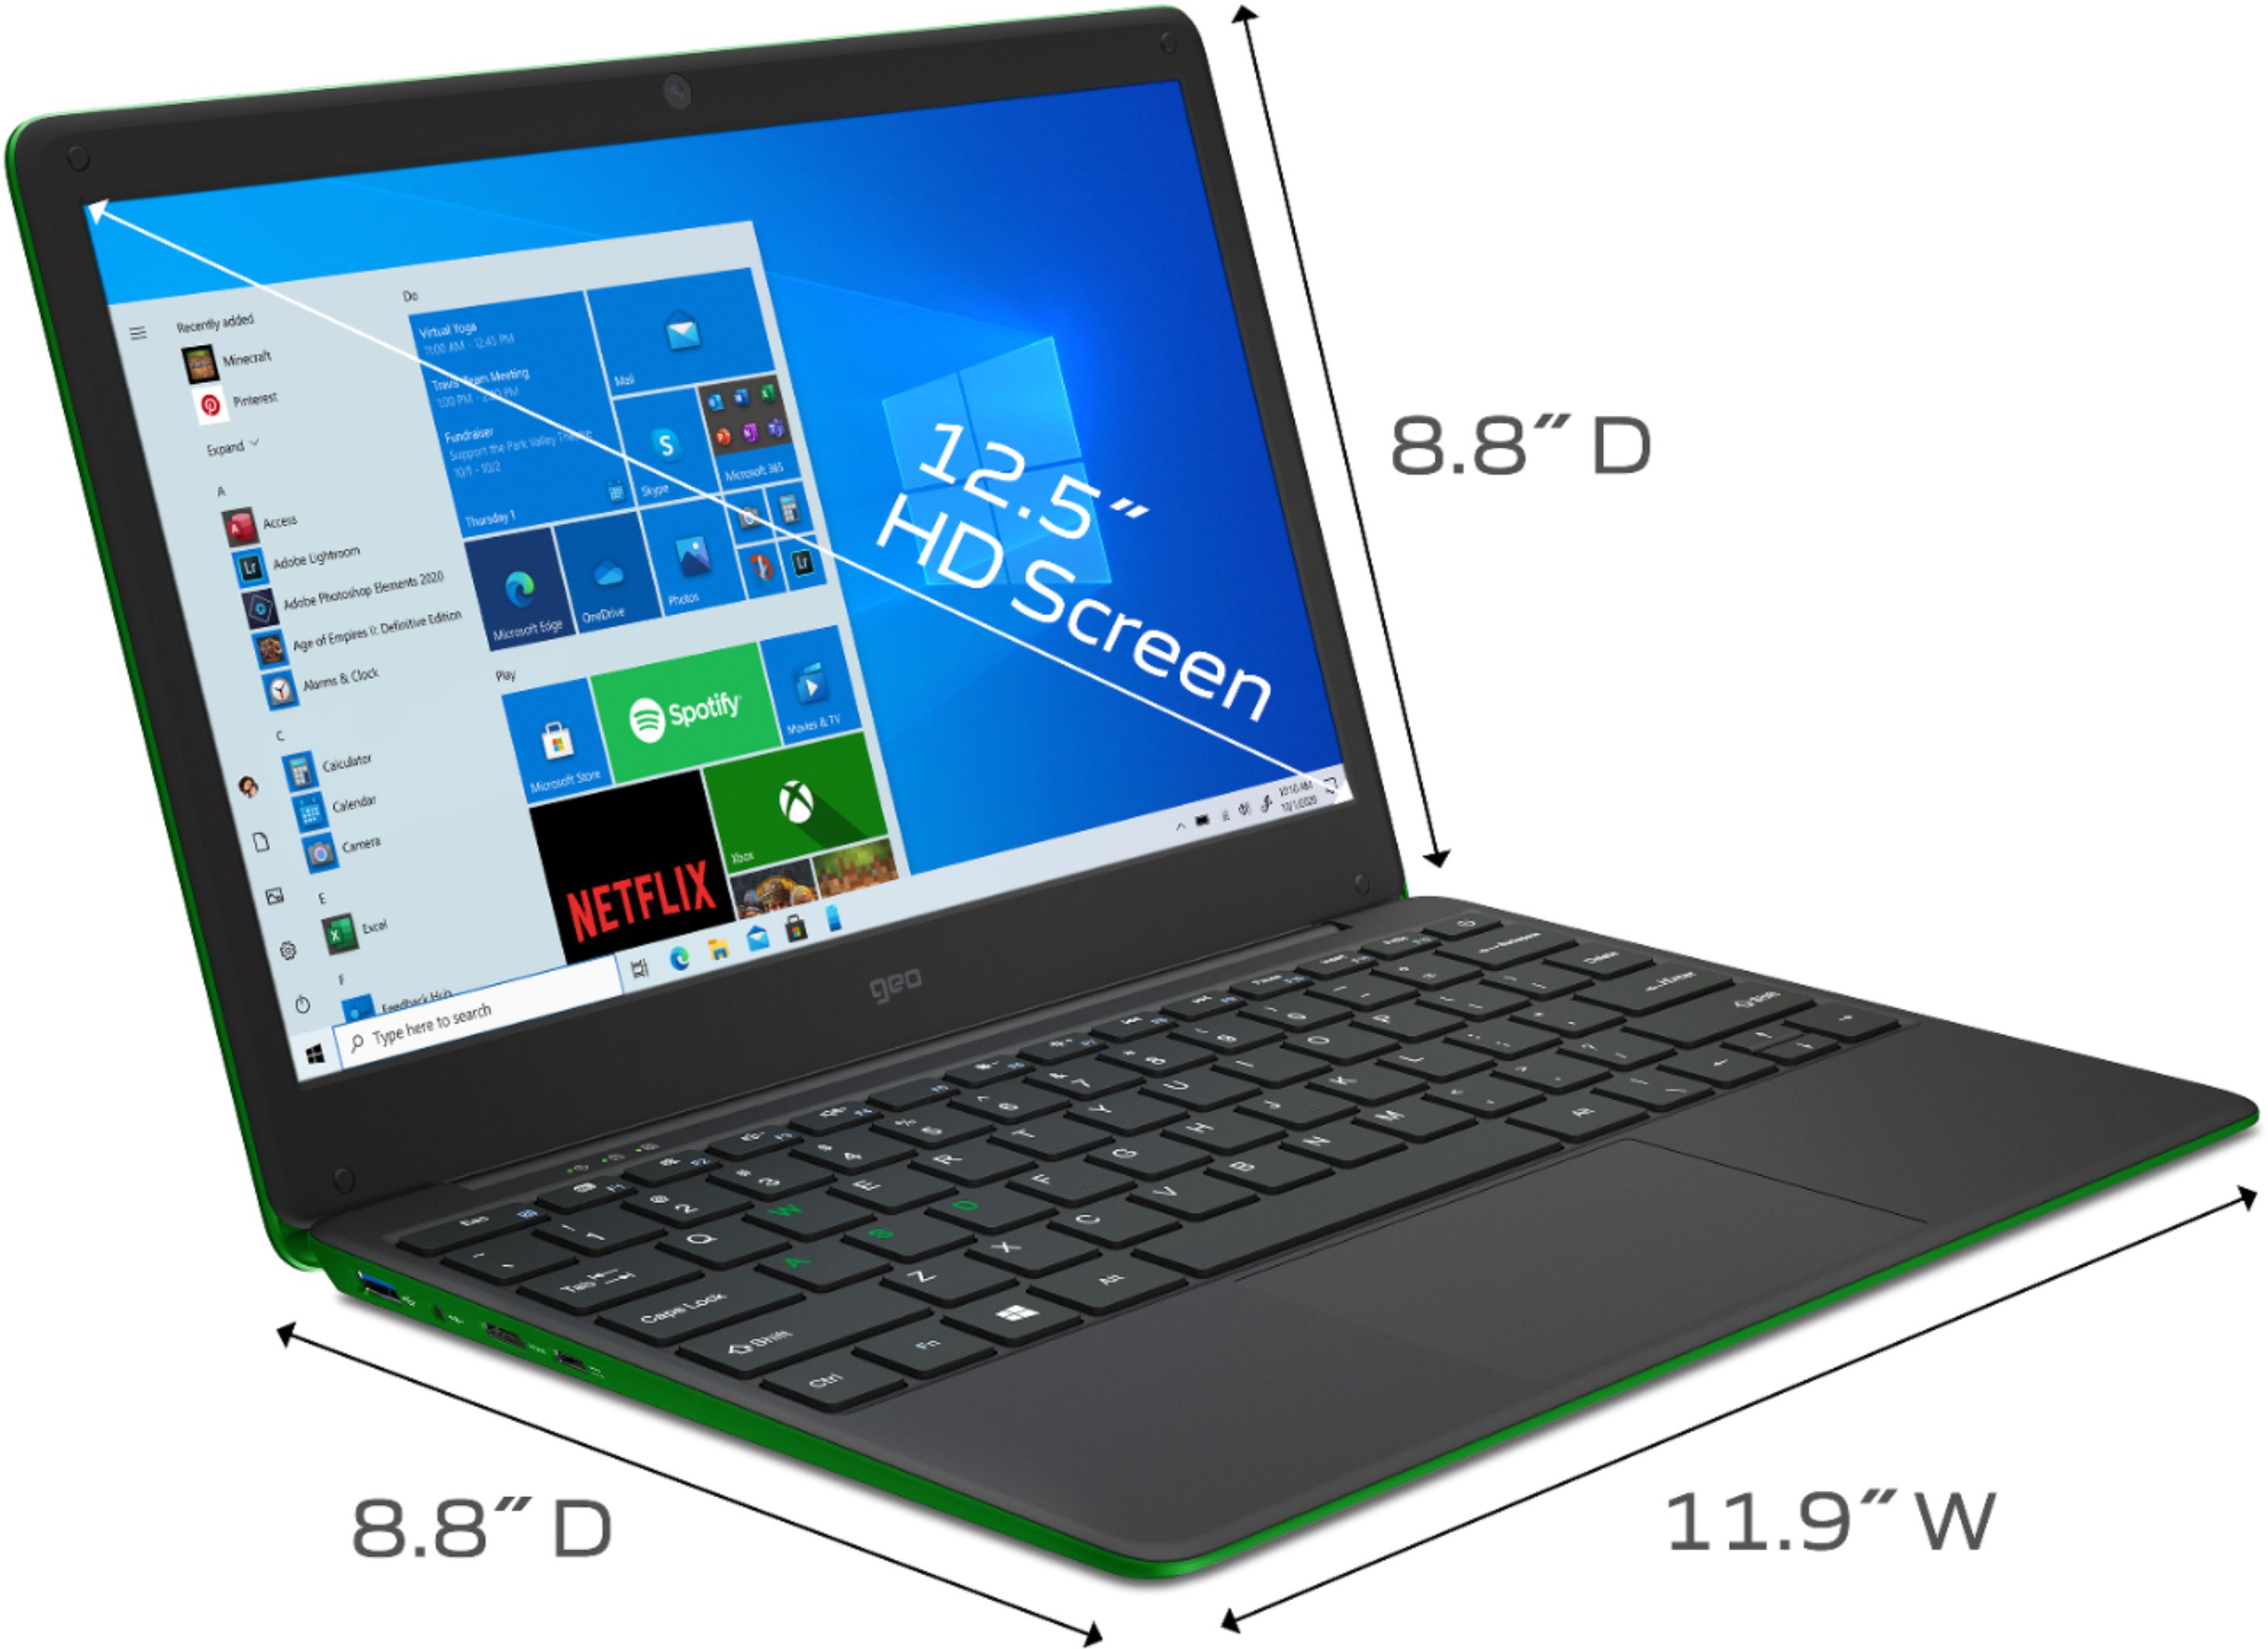 Geo - GeoBook 120 Minecraft Edition 12.5-inch HD Laptop - Intel Celeron Quad Core Processor - 4GB Memory - 64GB eMMC - Minecraft Green $129.99